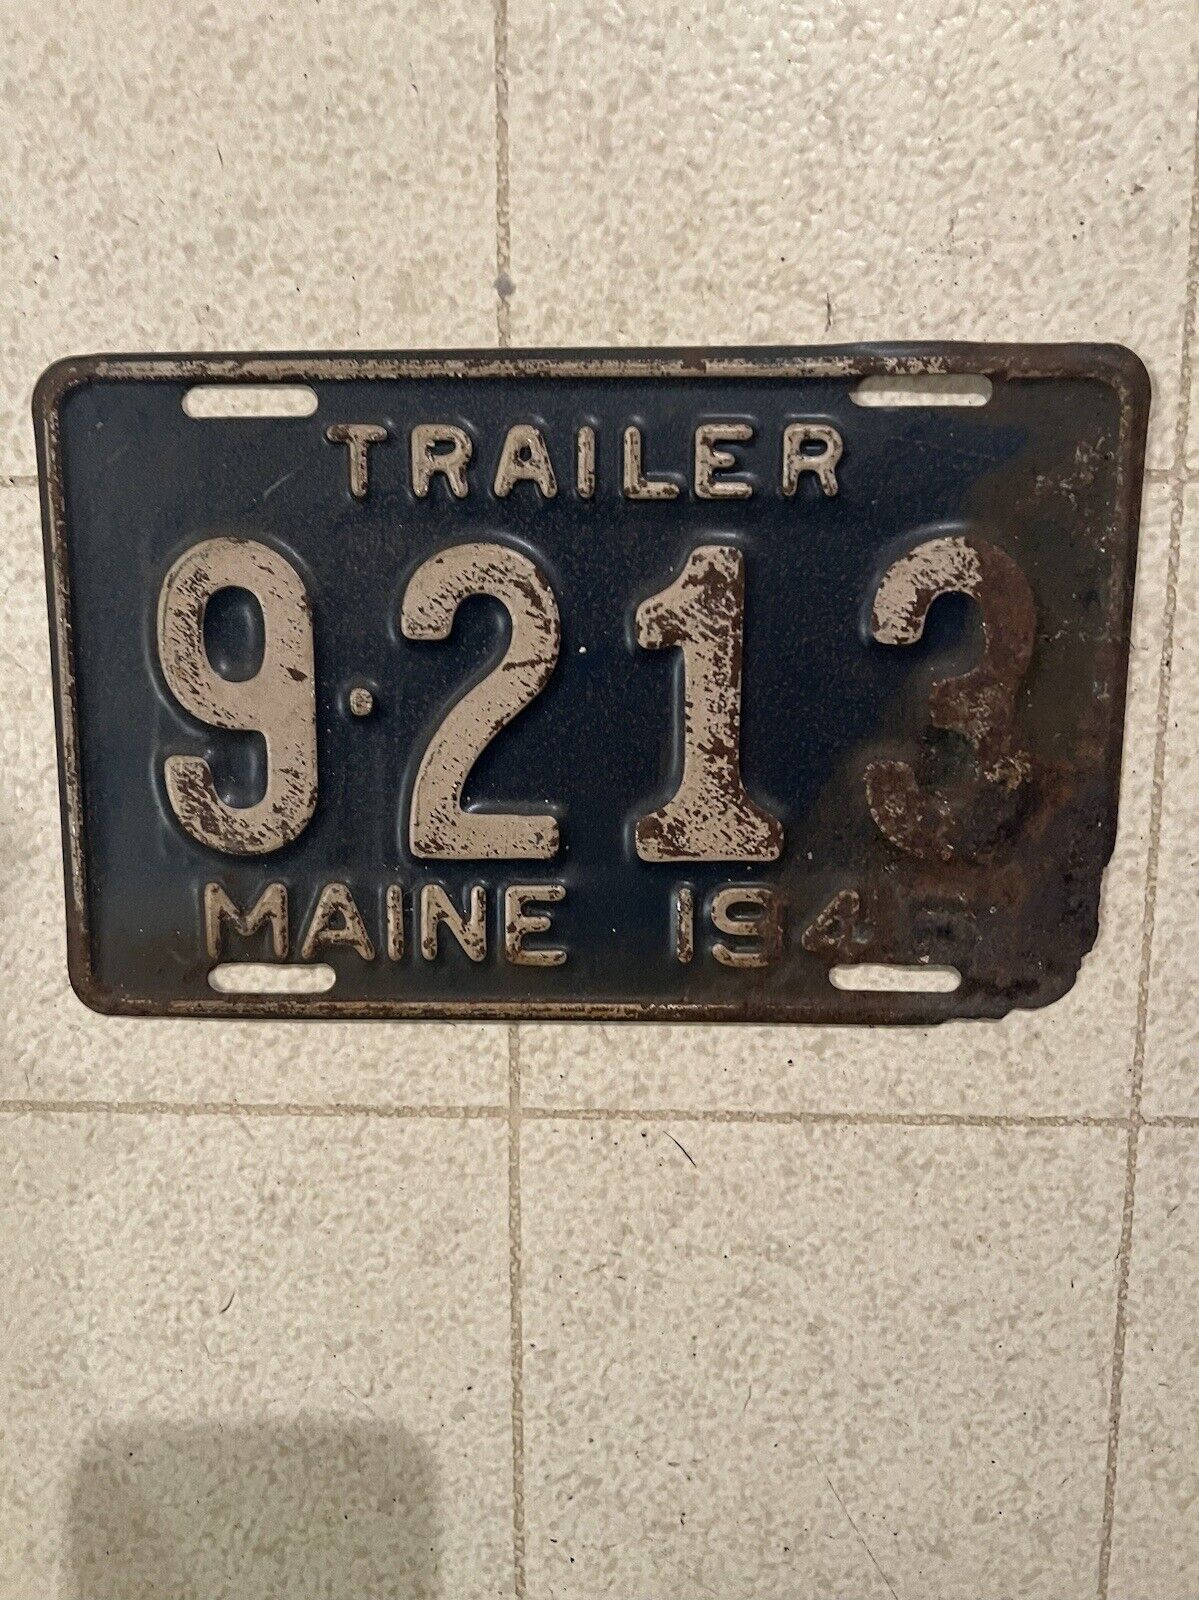 Vintage Maine 1946 TRAILER License Plate, 9-213 Low Number